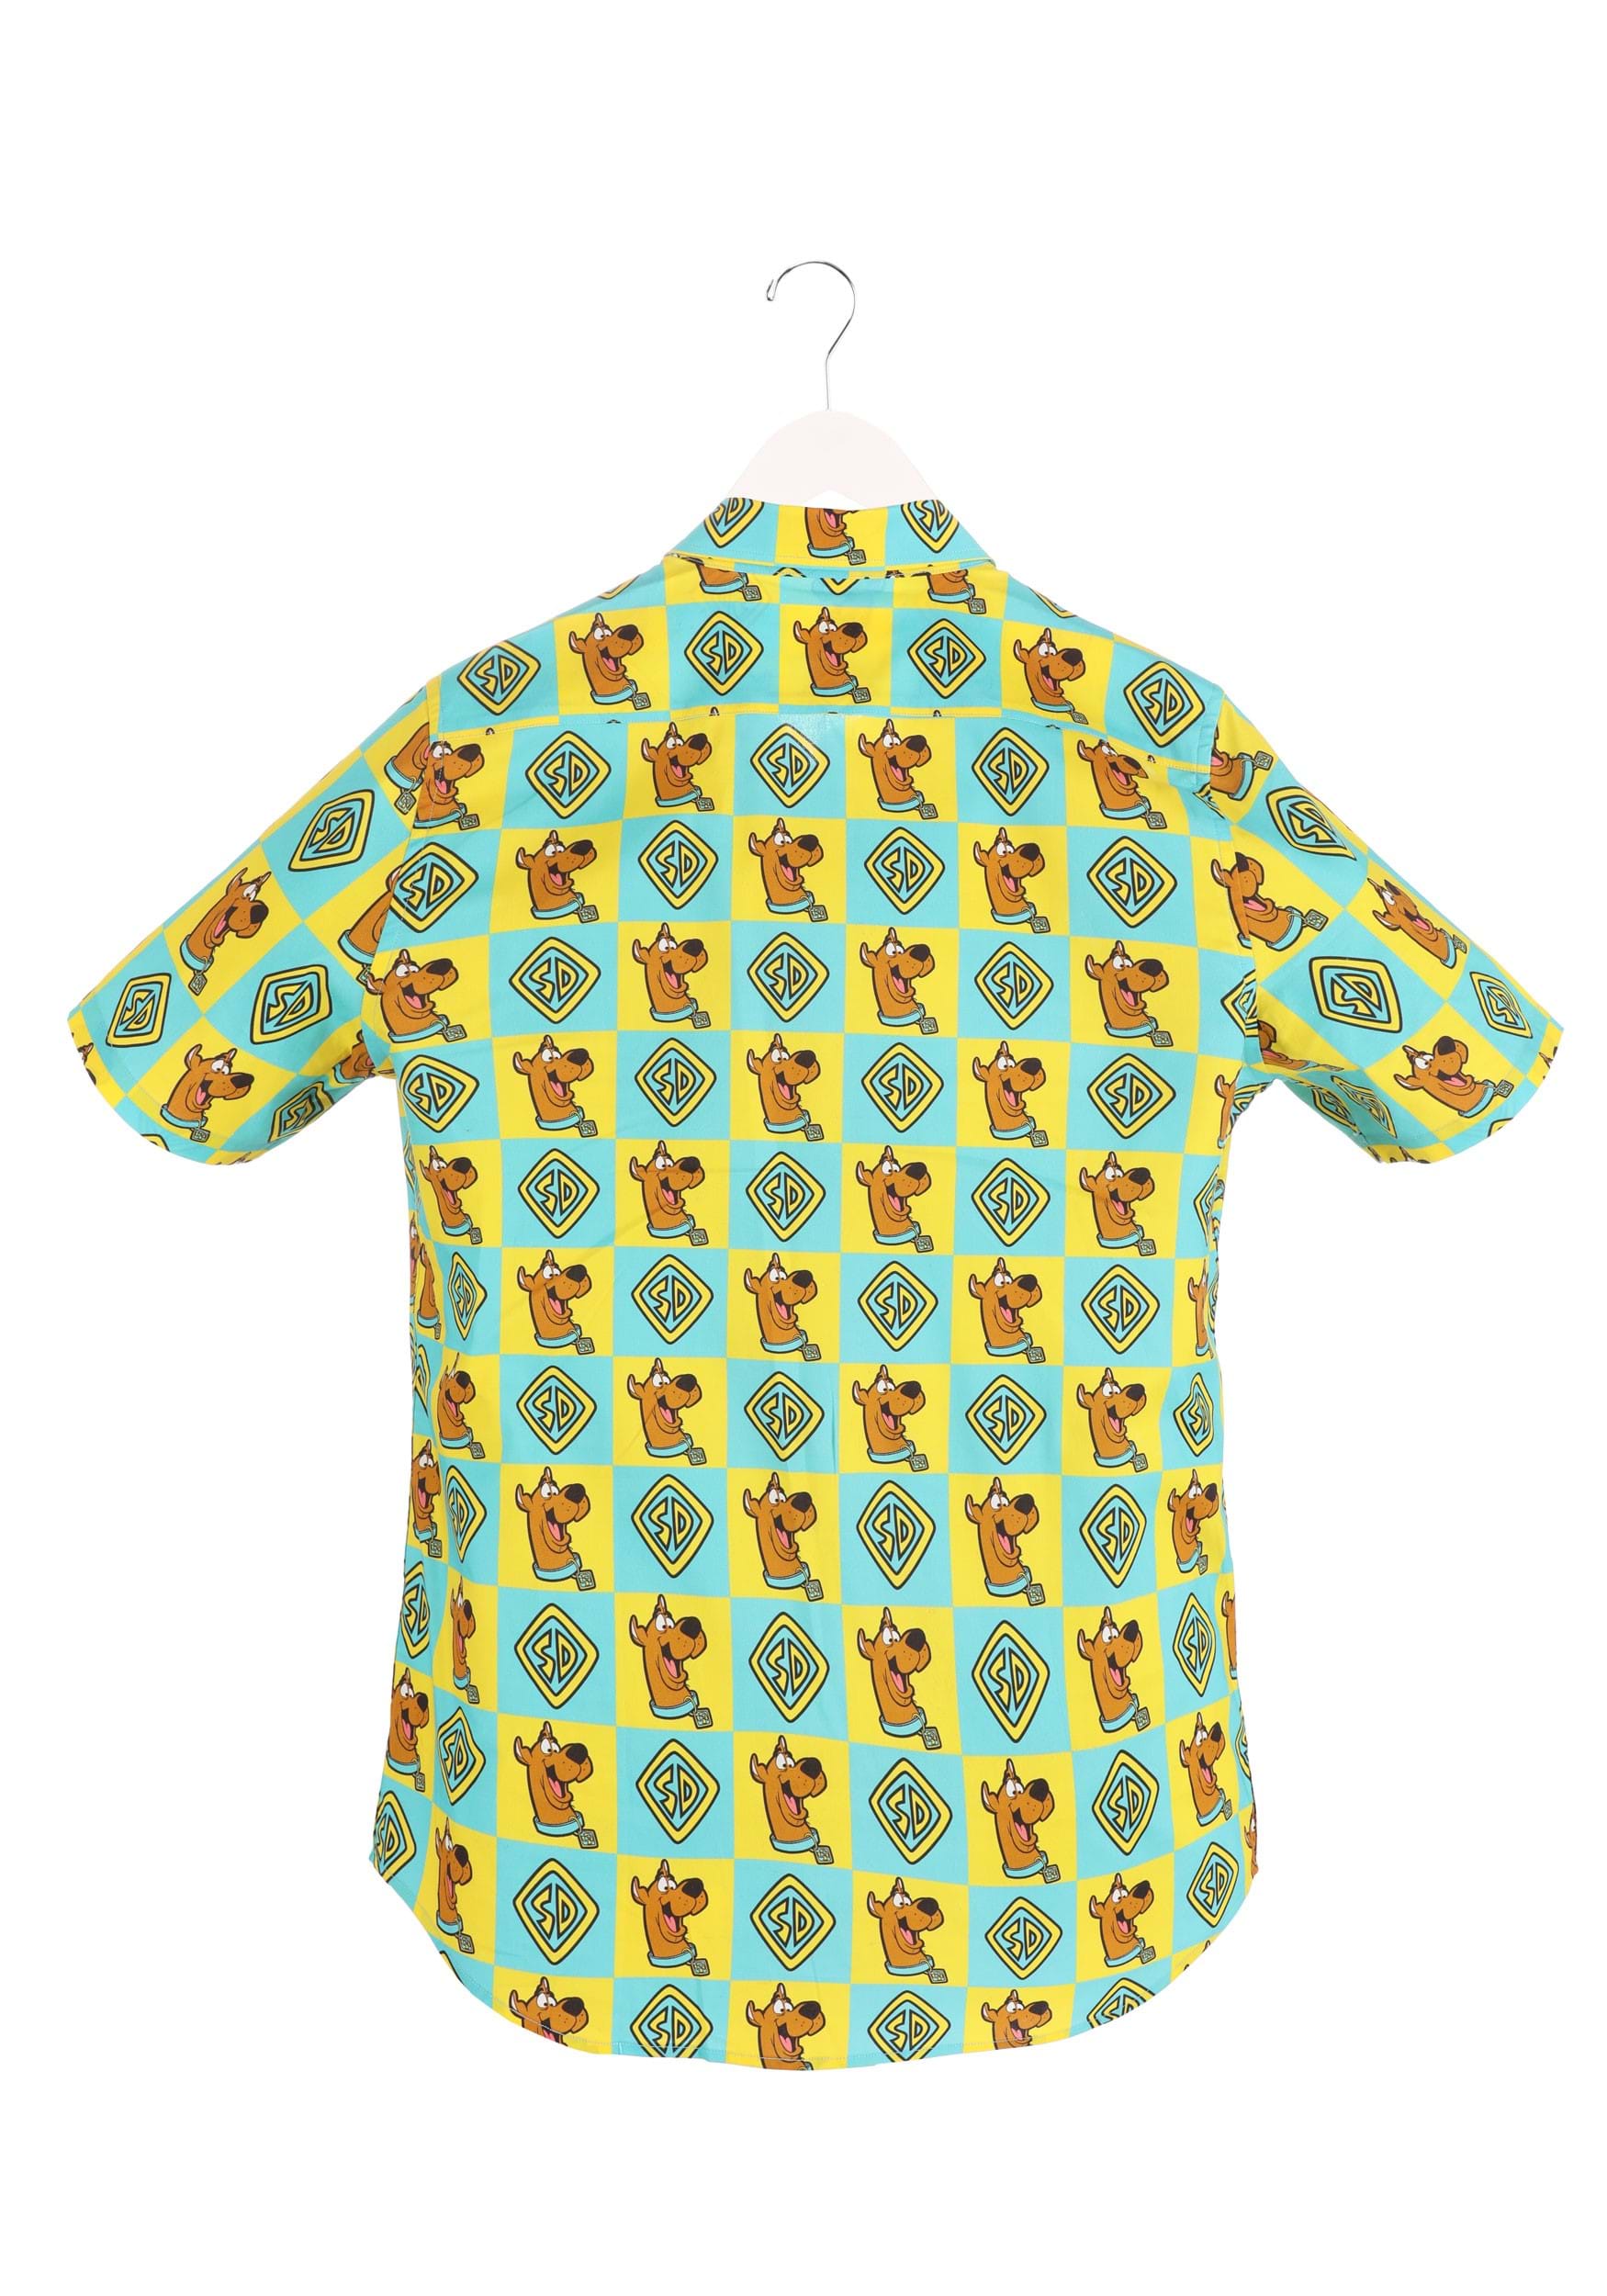 Scooby Doo Collar Shirt For Men , Scooby Doo Apparel